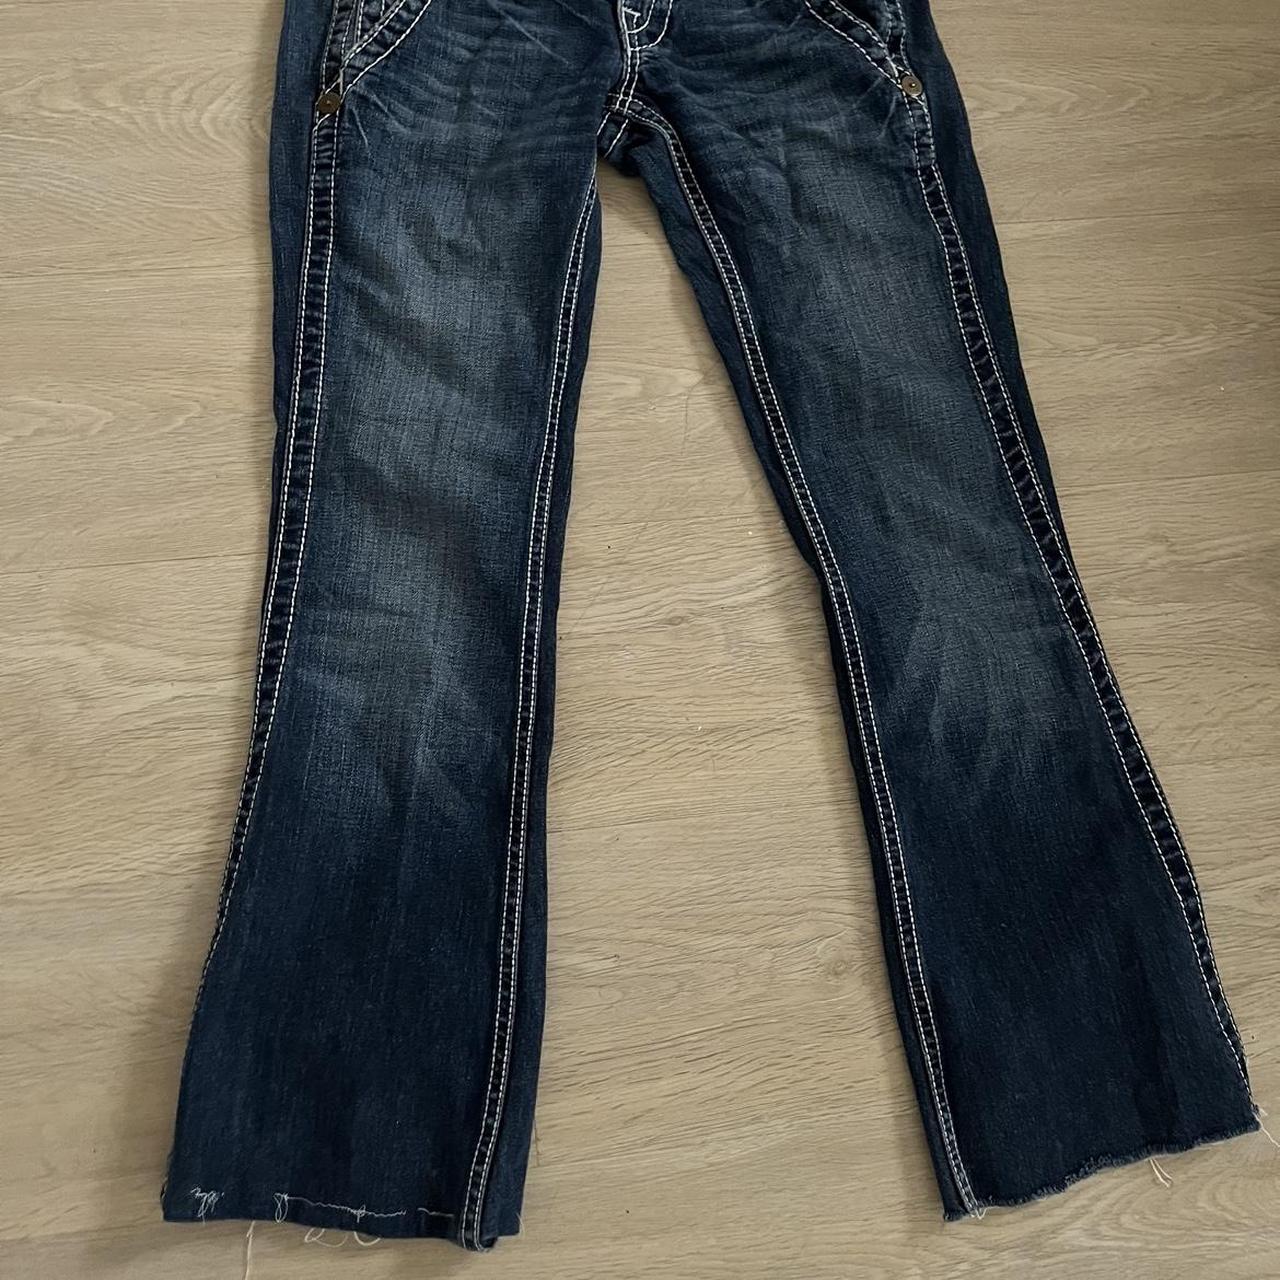 True religion low rise bootcut jeans Size 25 Great... - Depop